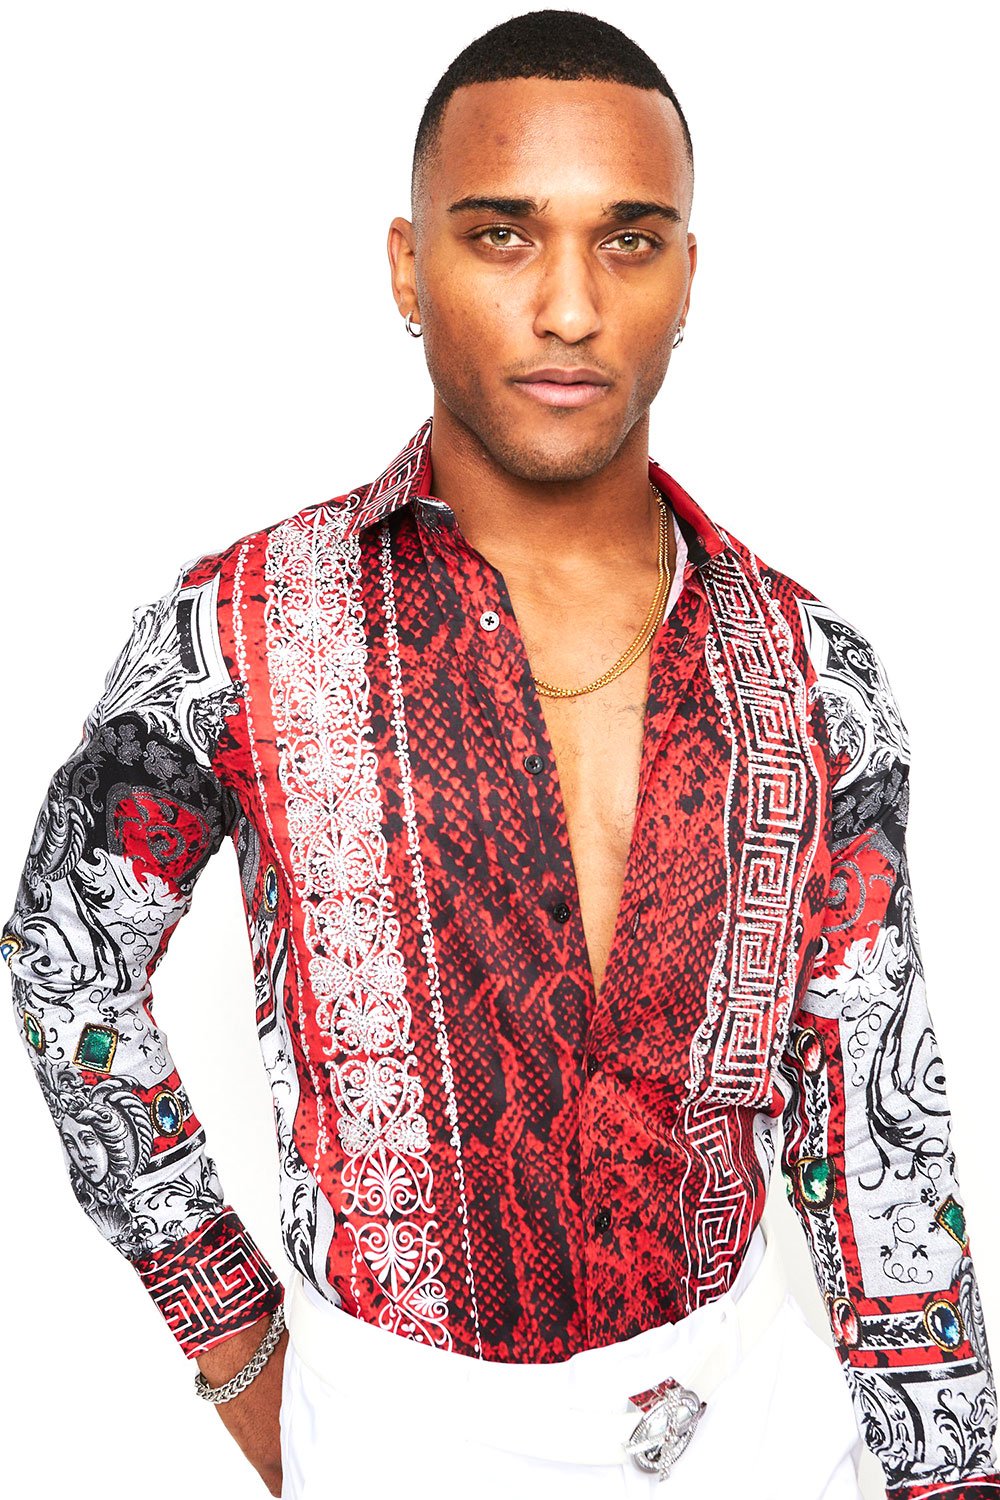 BARABAS Men's Red Snake Skin Printed Rhinestone dress Shirts SPR962